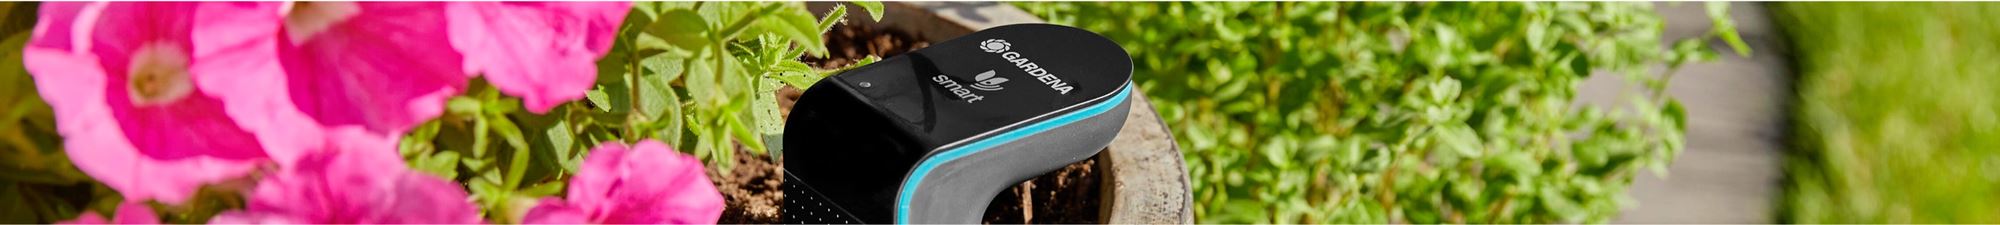 GARDENA smart system sensor skjult i potteplante